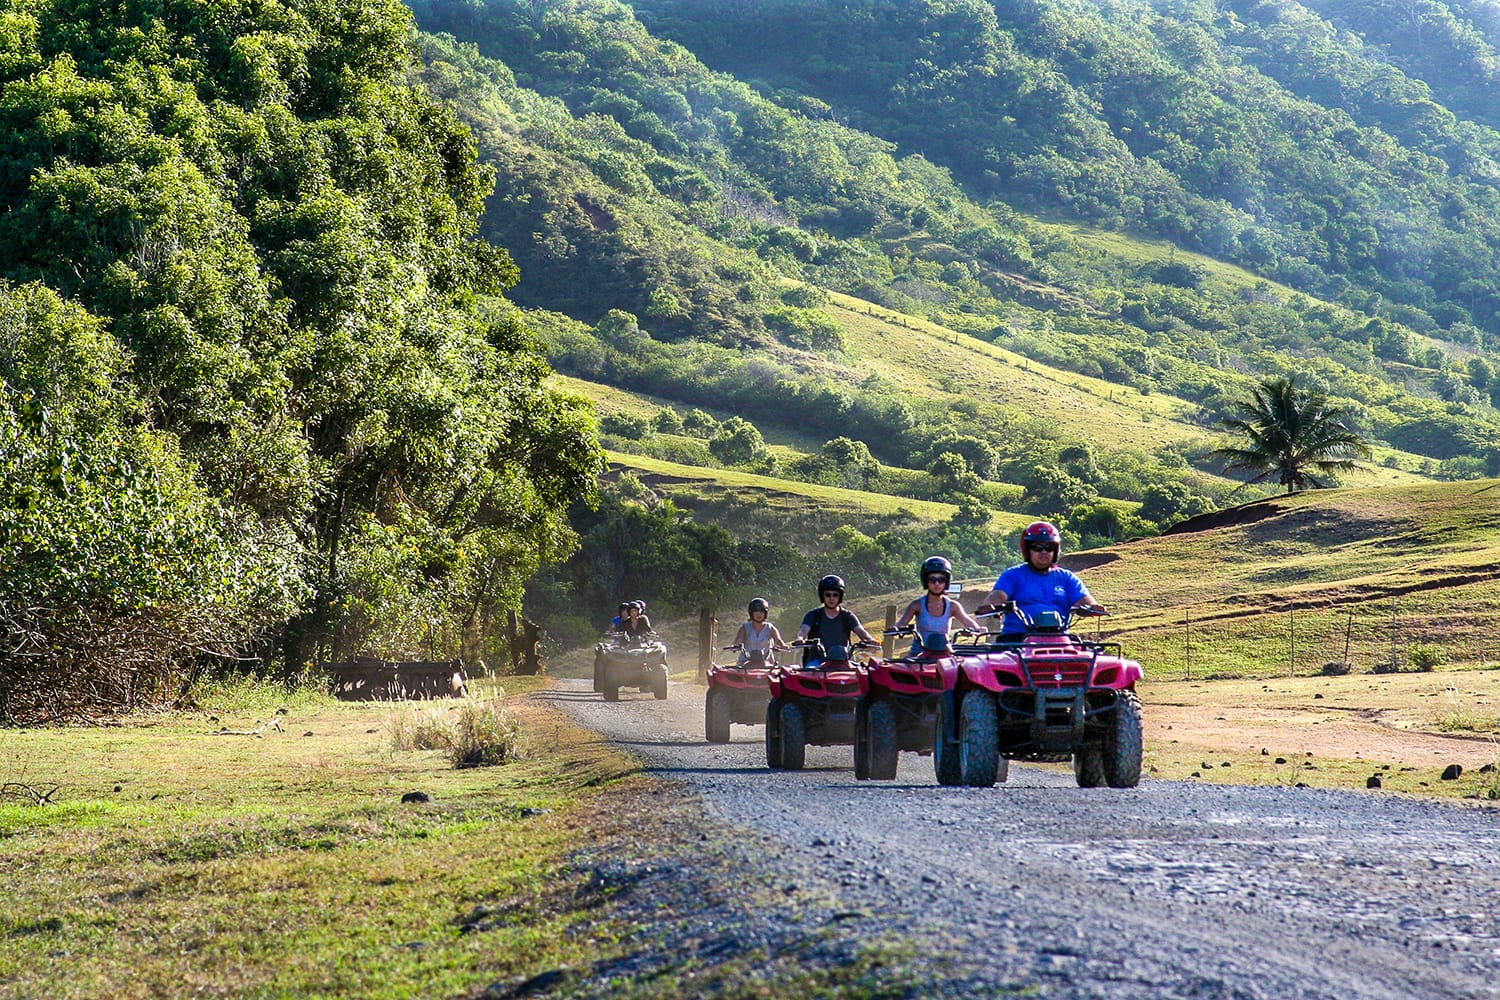 A tour group riding ATVs on the Kualoa Ranch in Oahu, Hawaii